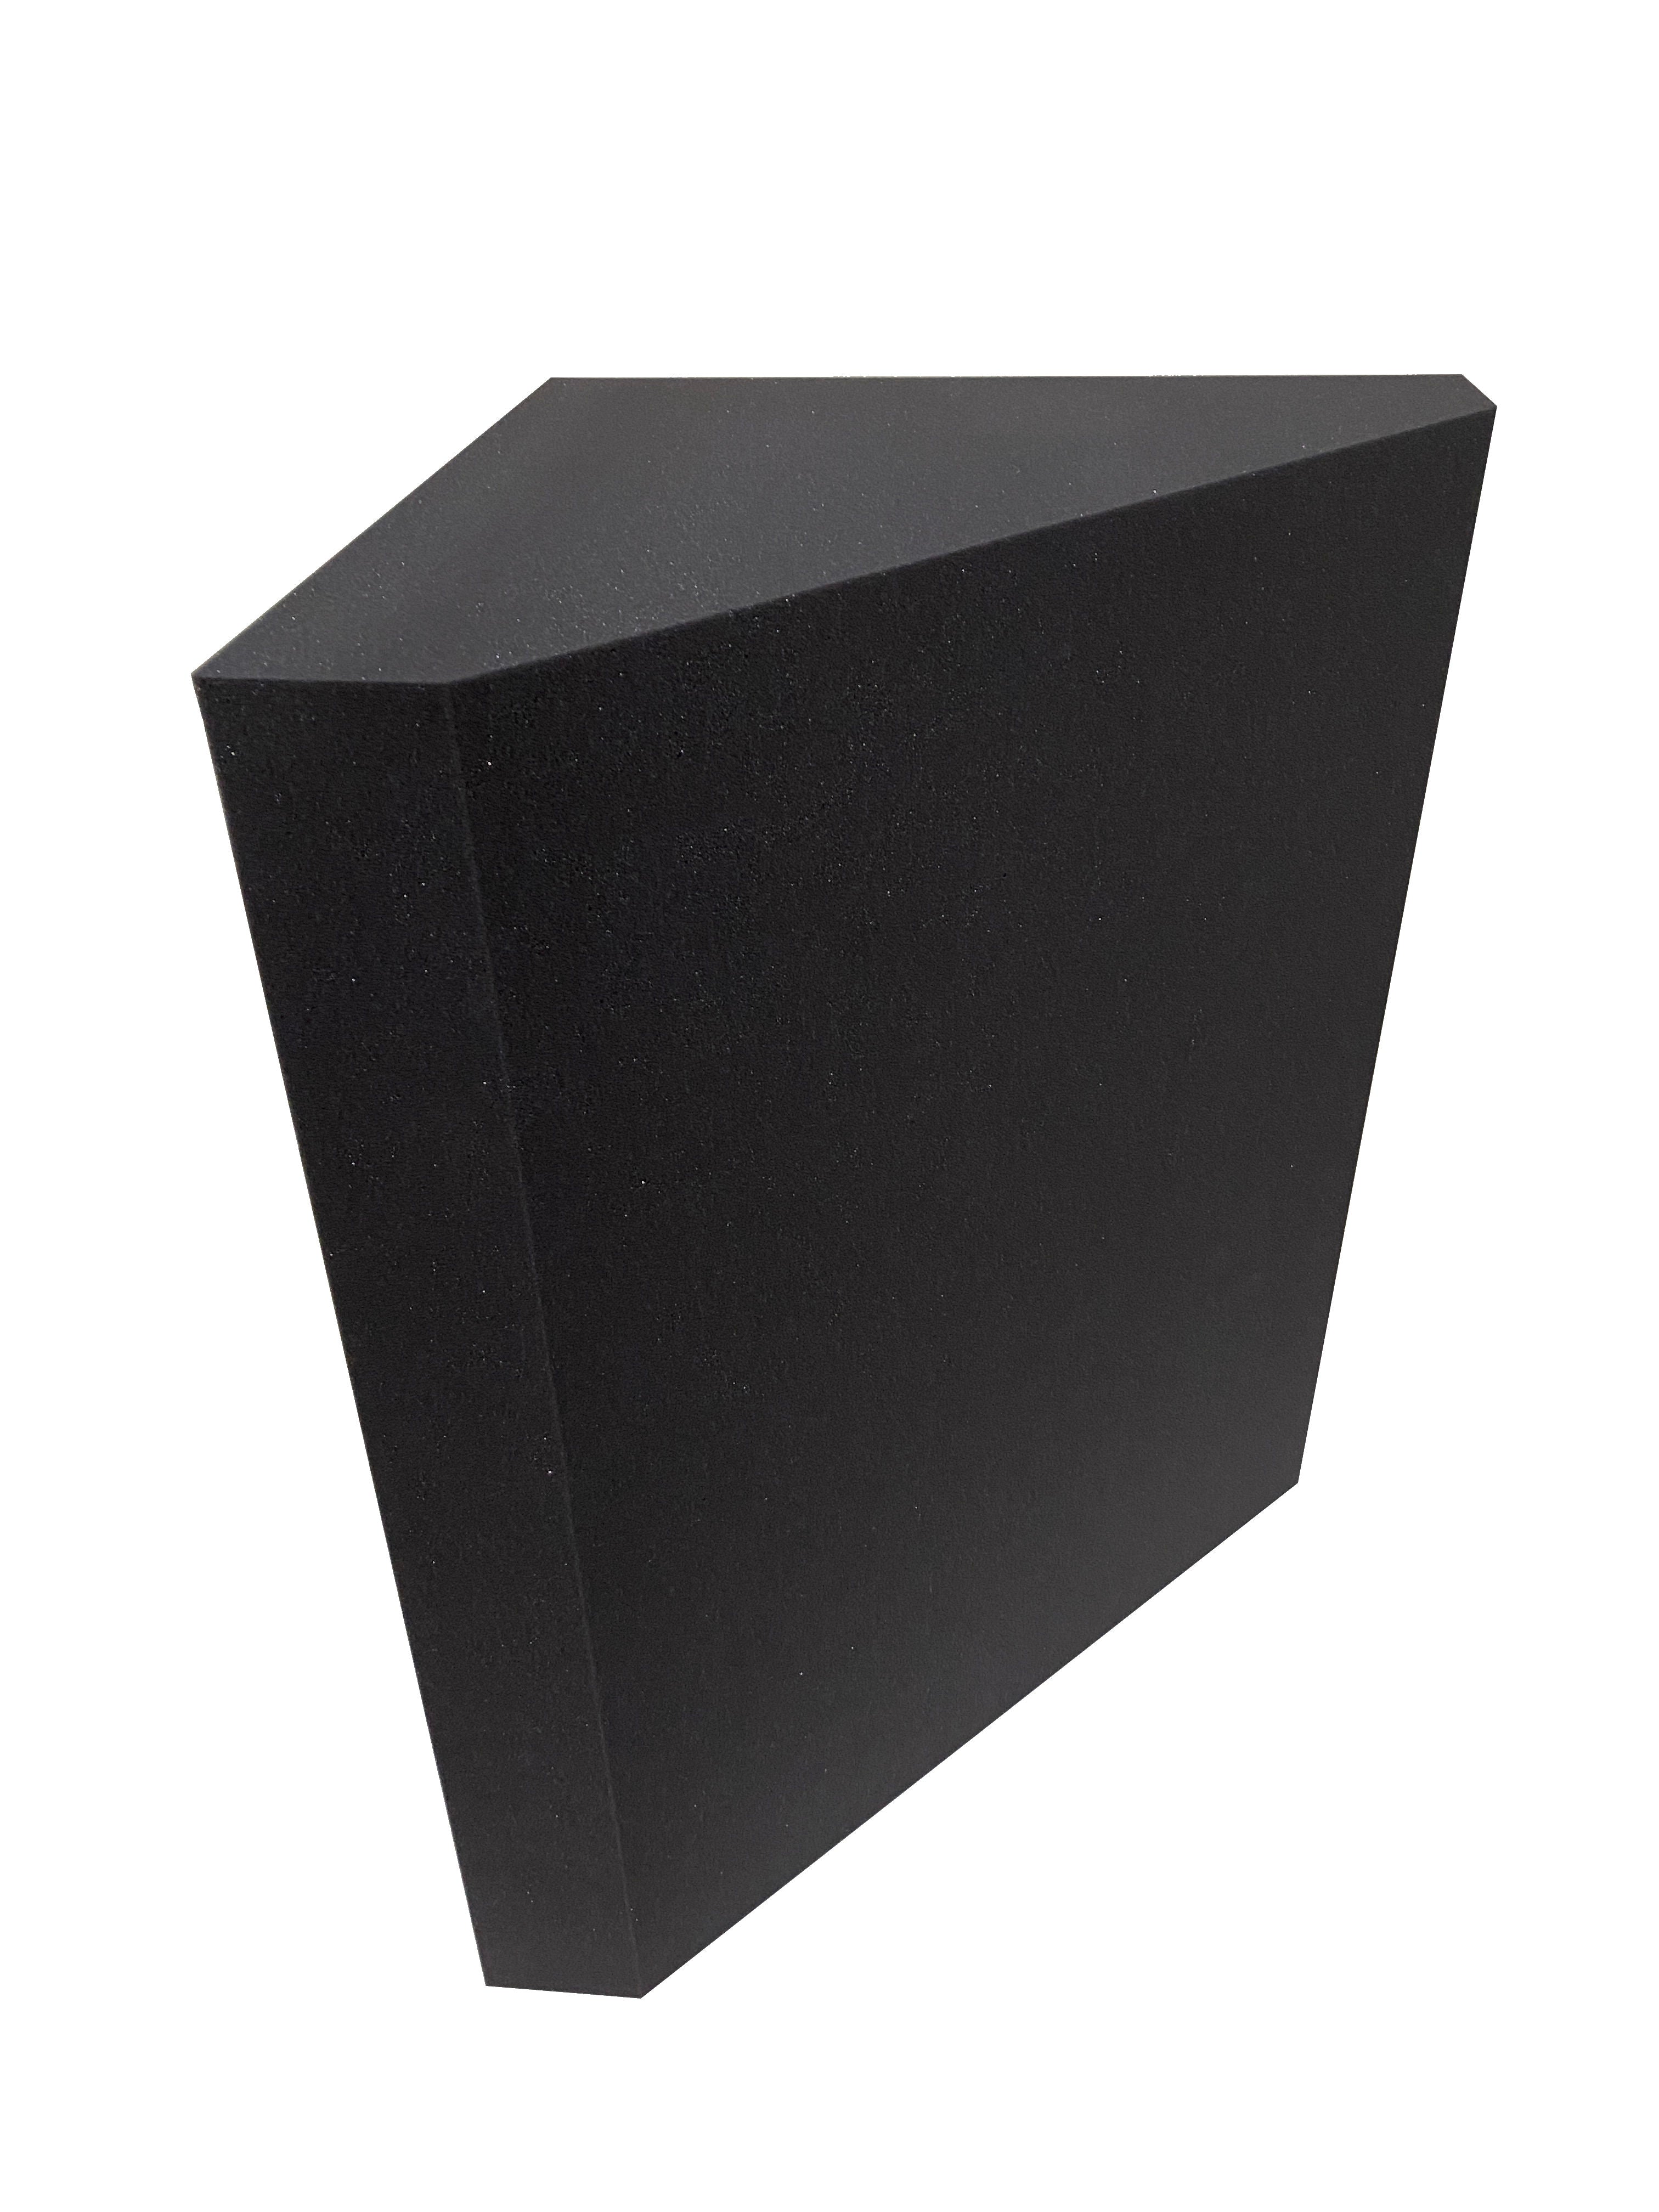 Buy dark-grey MAXXX Corner Bass Trap Acoustic Studio Foam